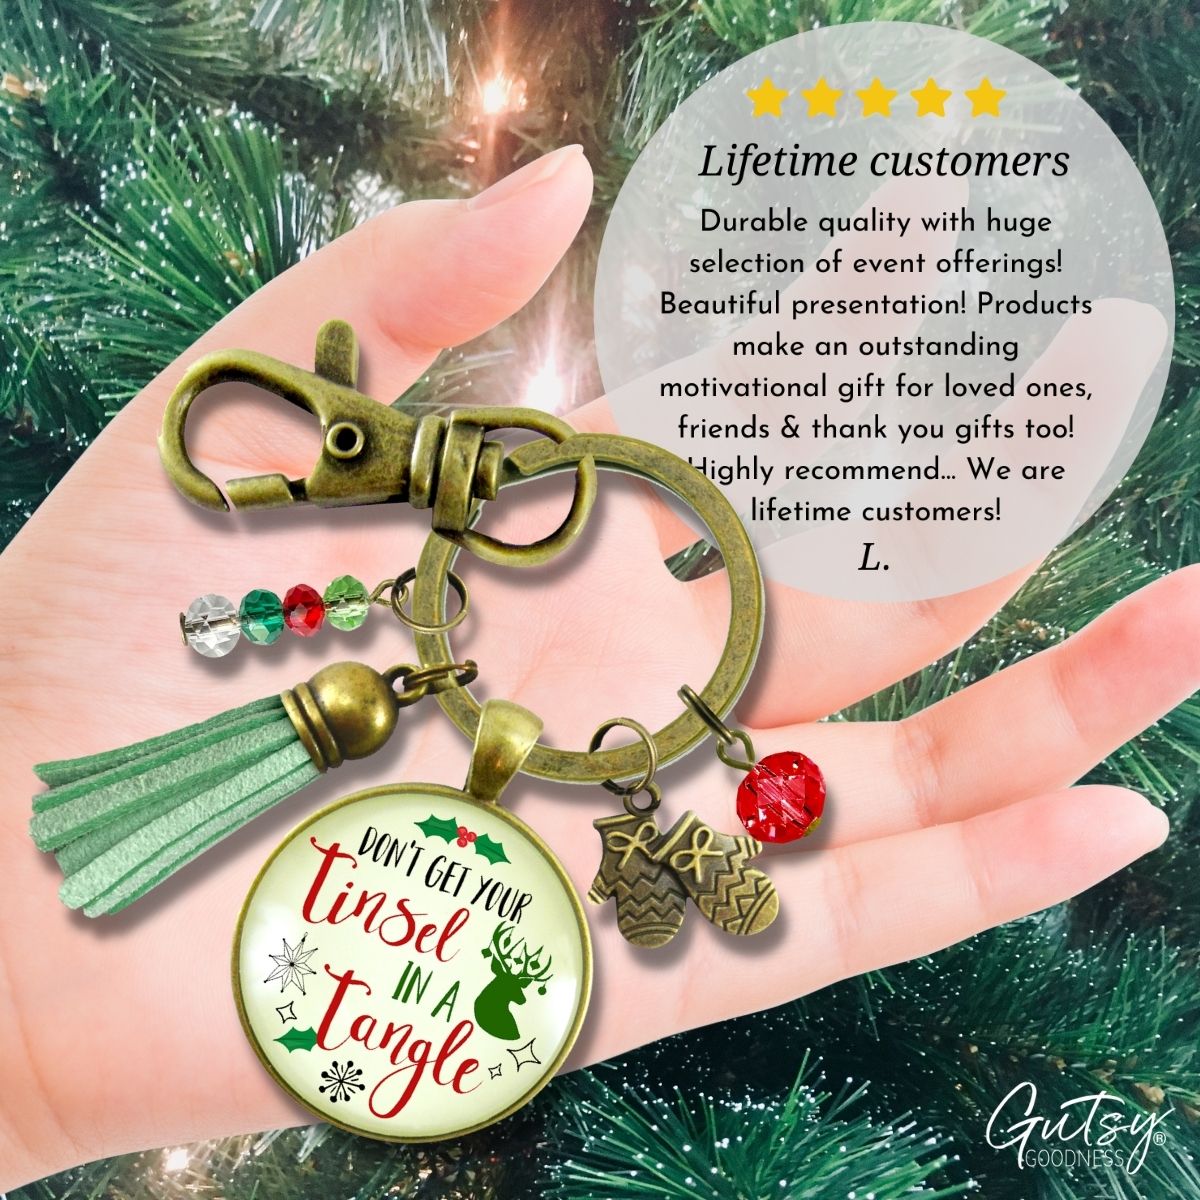 Christmas Keychain Don't Get Your Tinsel Tangle Charm Pendant Handmade Fun Holiday Gift Stocking Charm Tassel   - Gutsy Goodness Handmade Jewelry